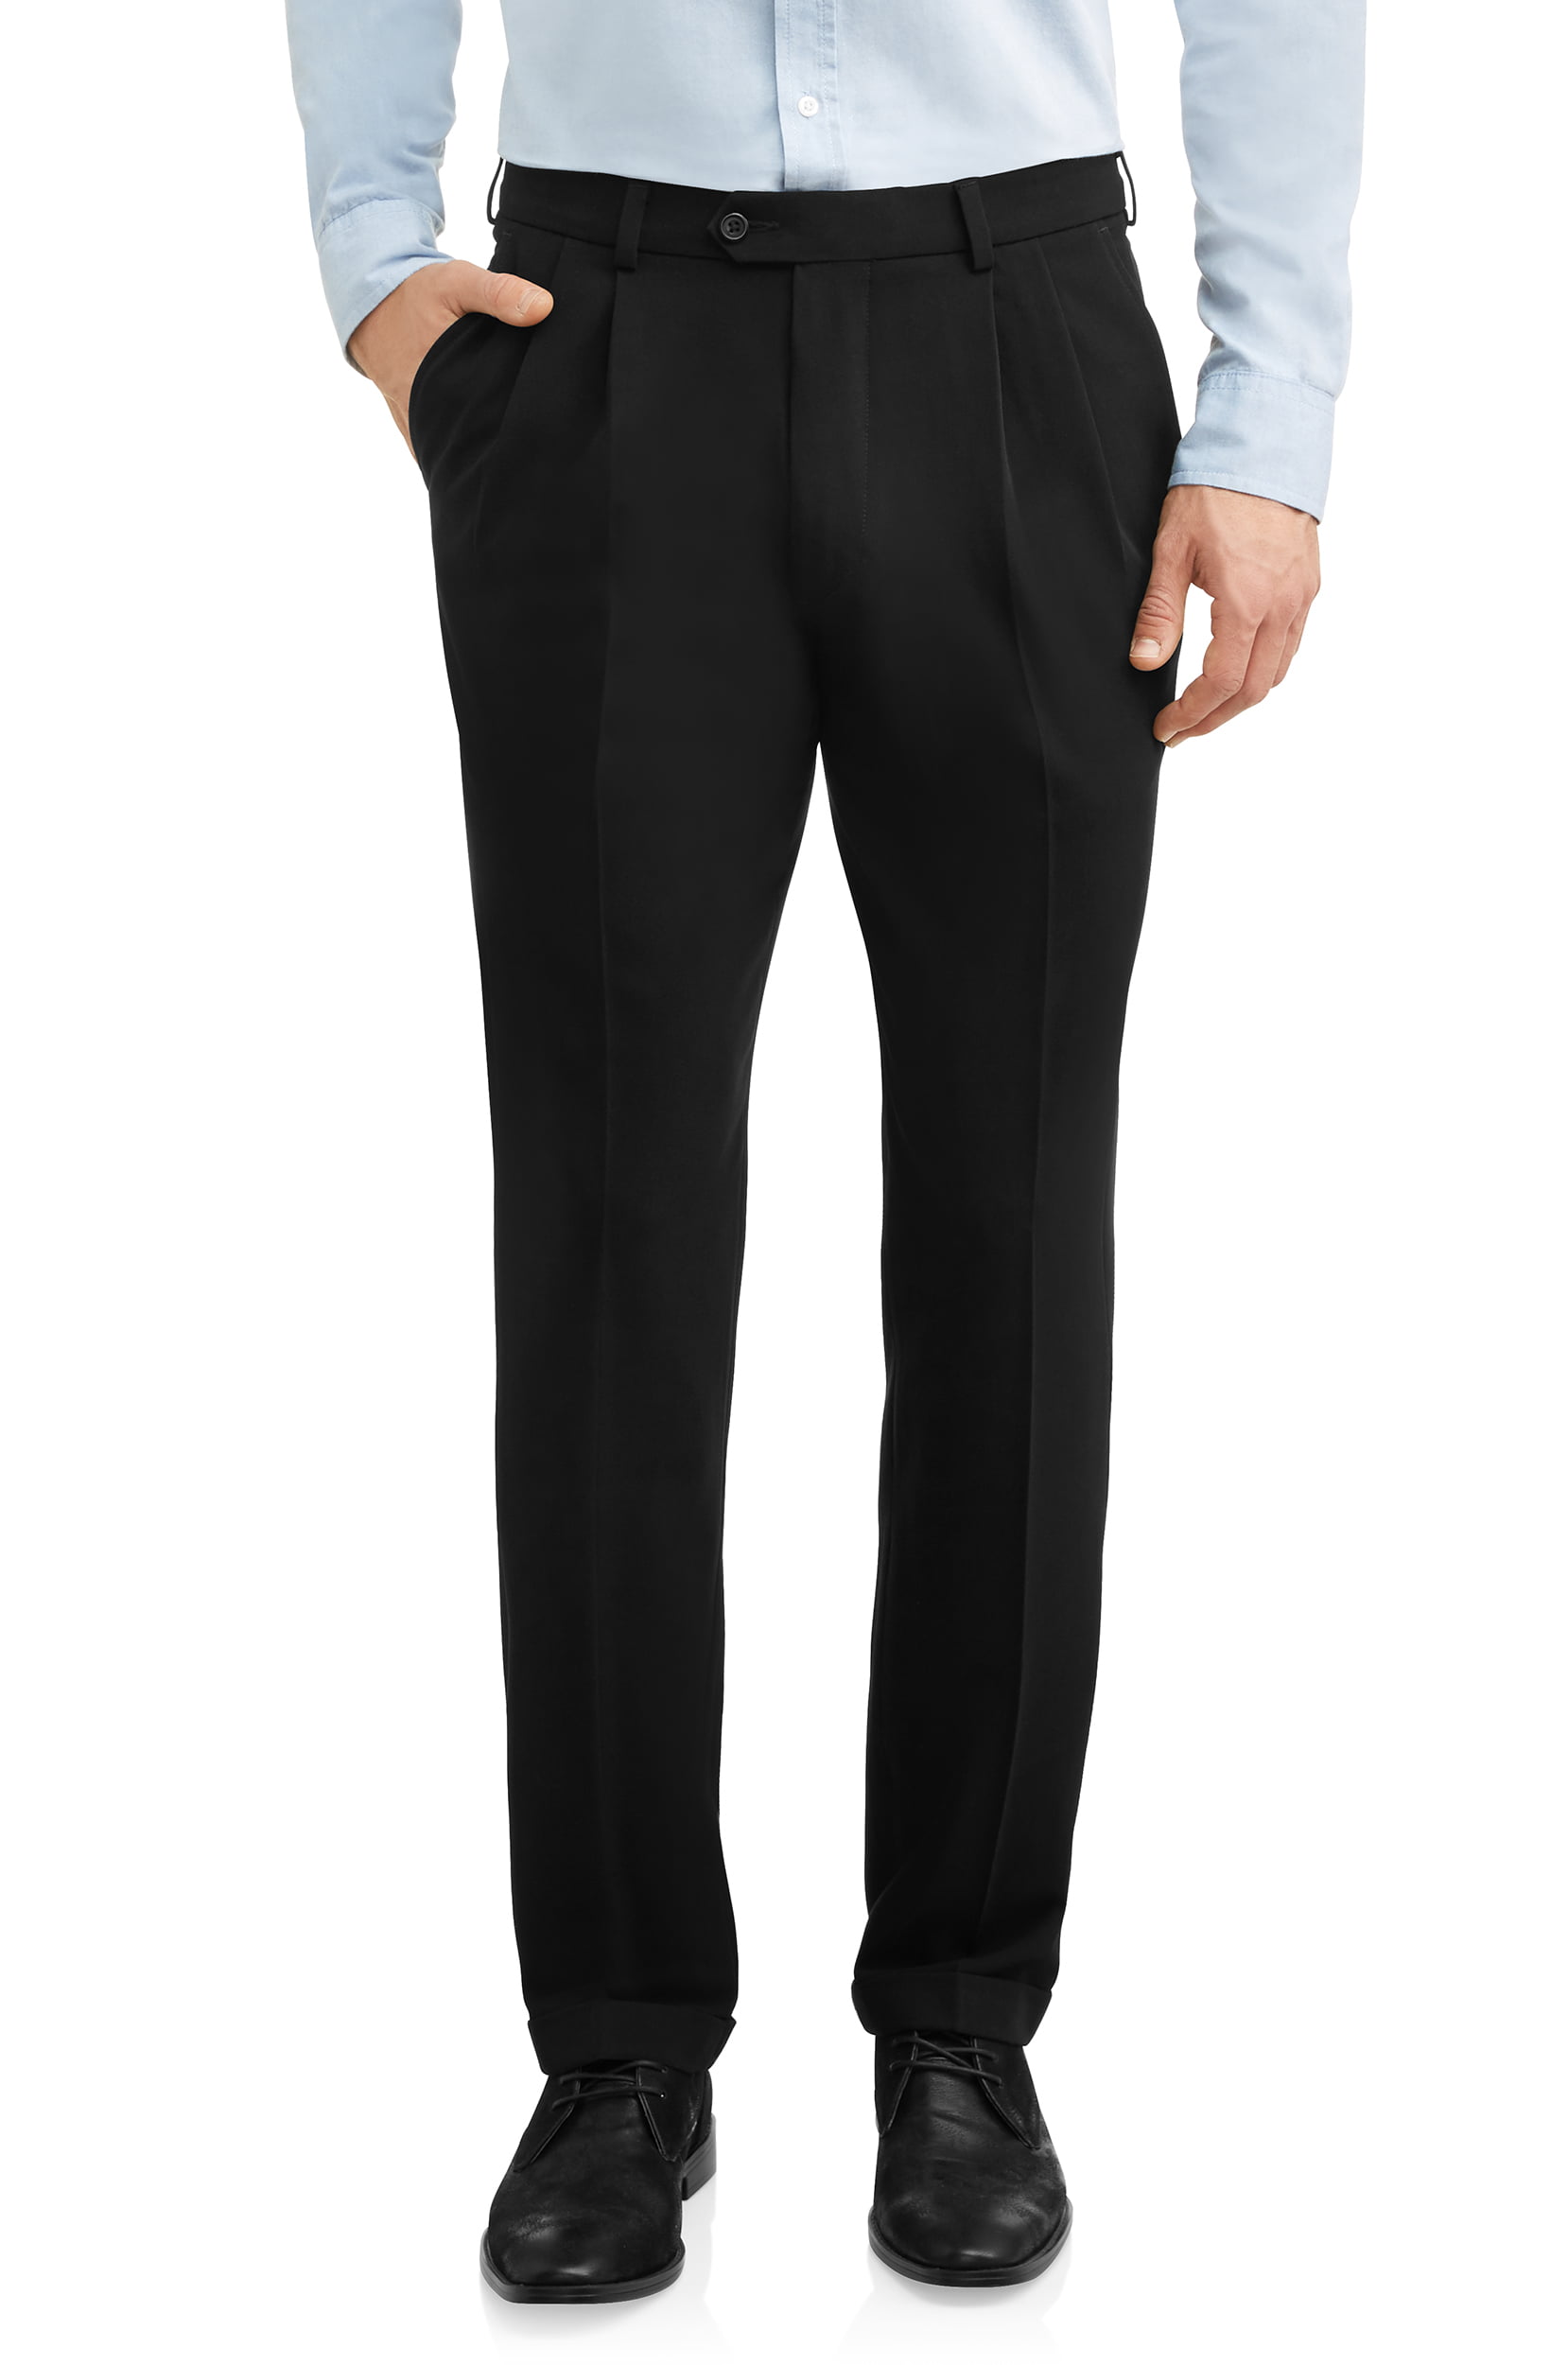 GEORGE - George Men's Premium Comfort Stretch Pleated Cuffed Suit Pant ...